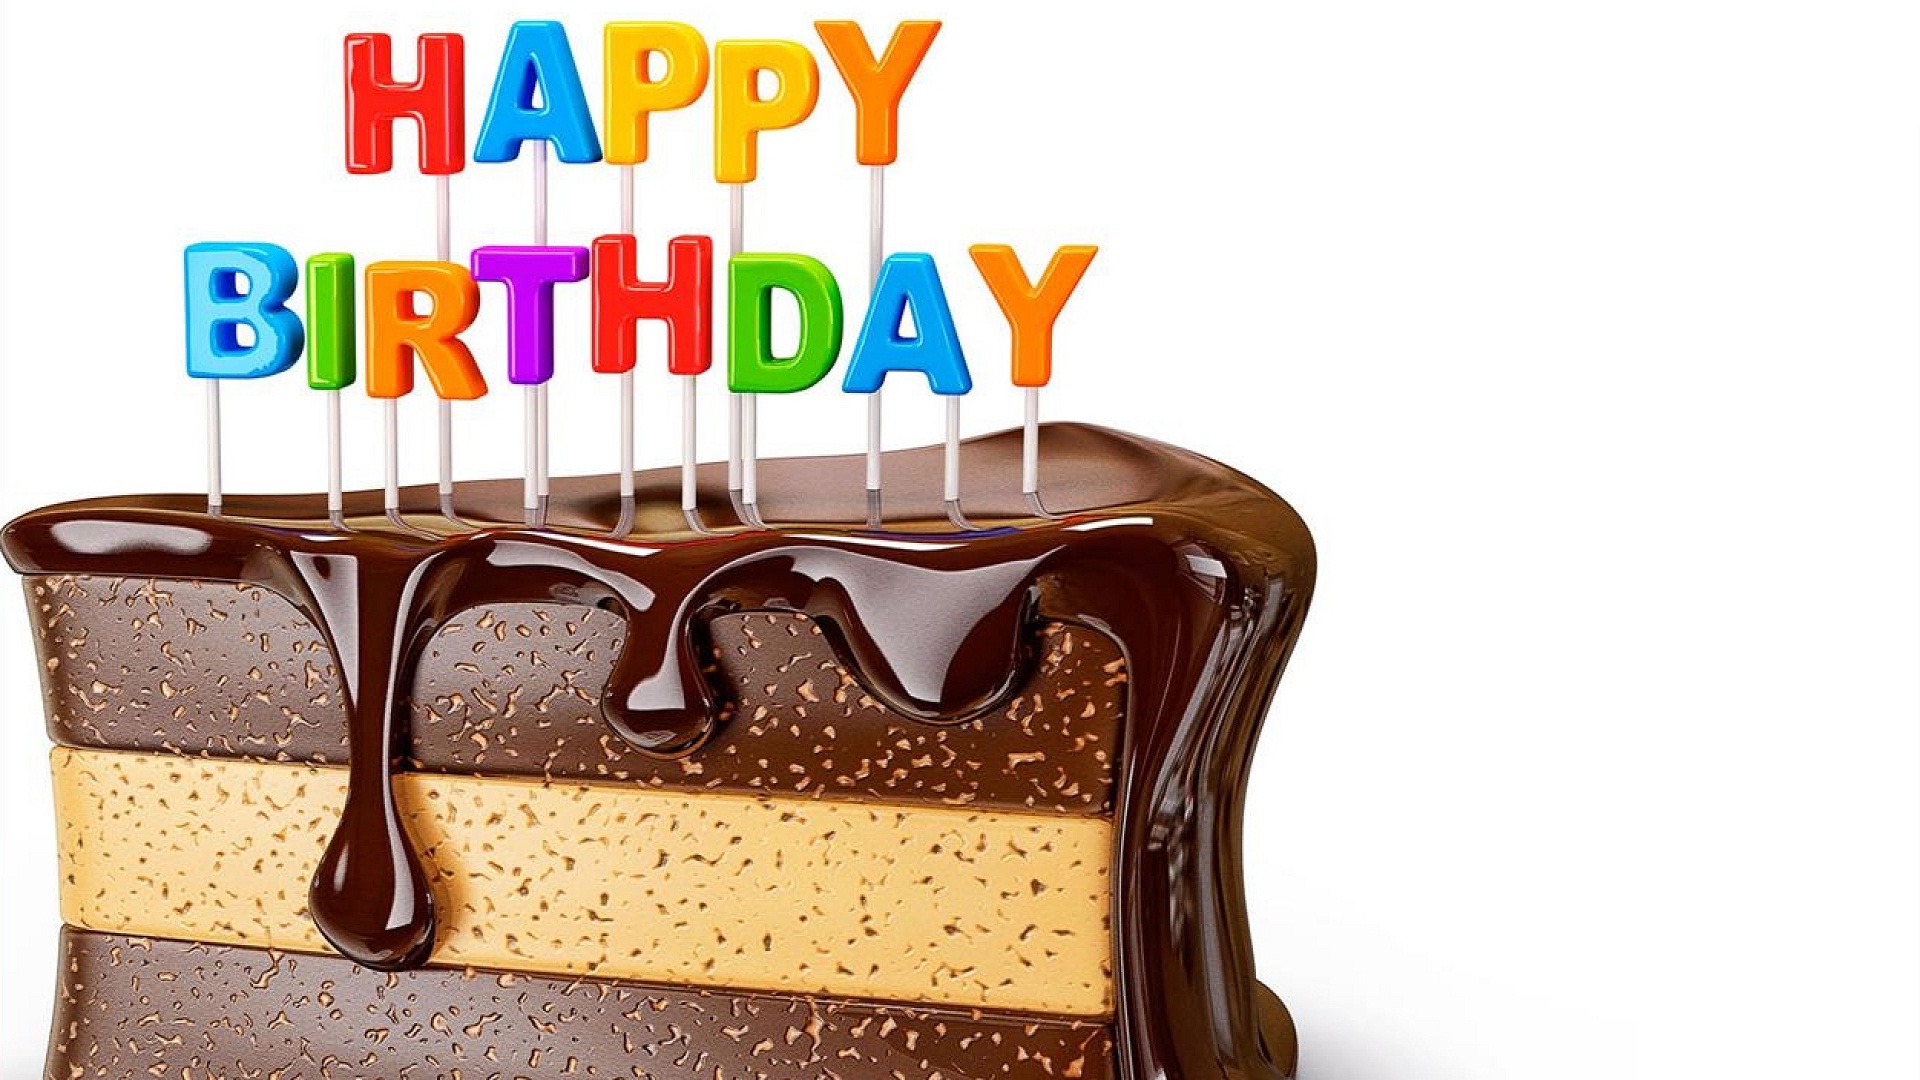 Happy-birthday-chocolaty-cake-for-you.jpg